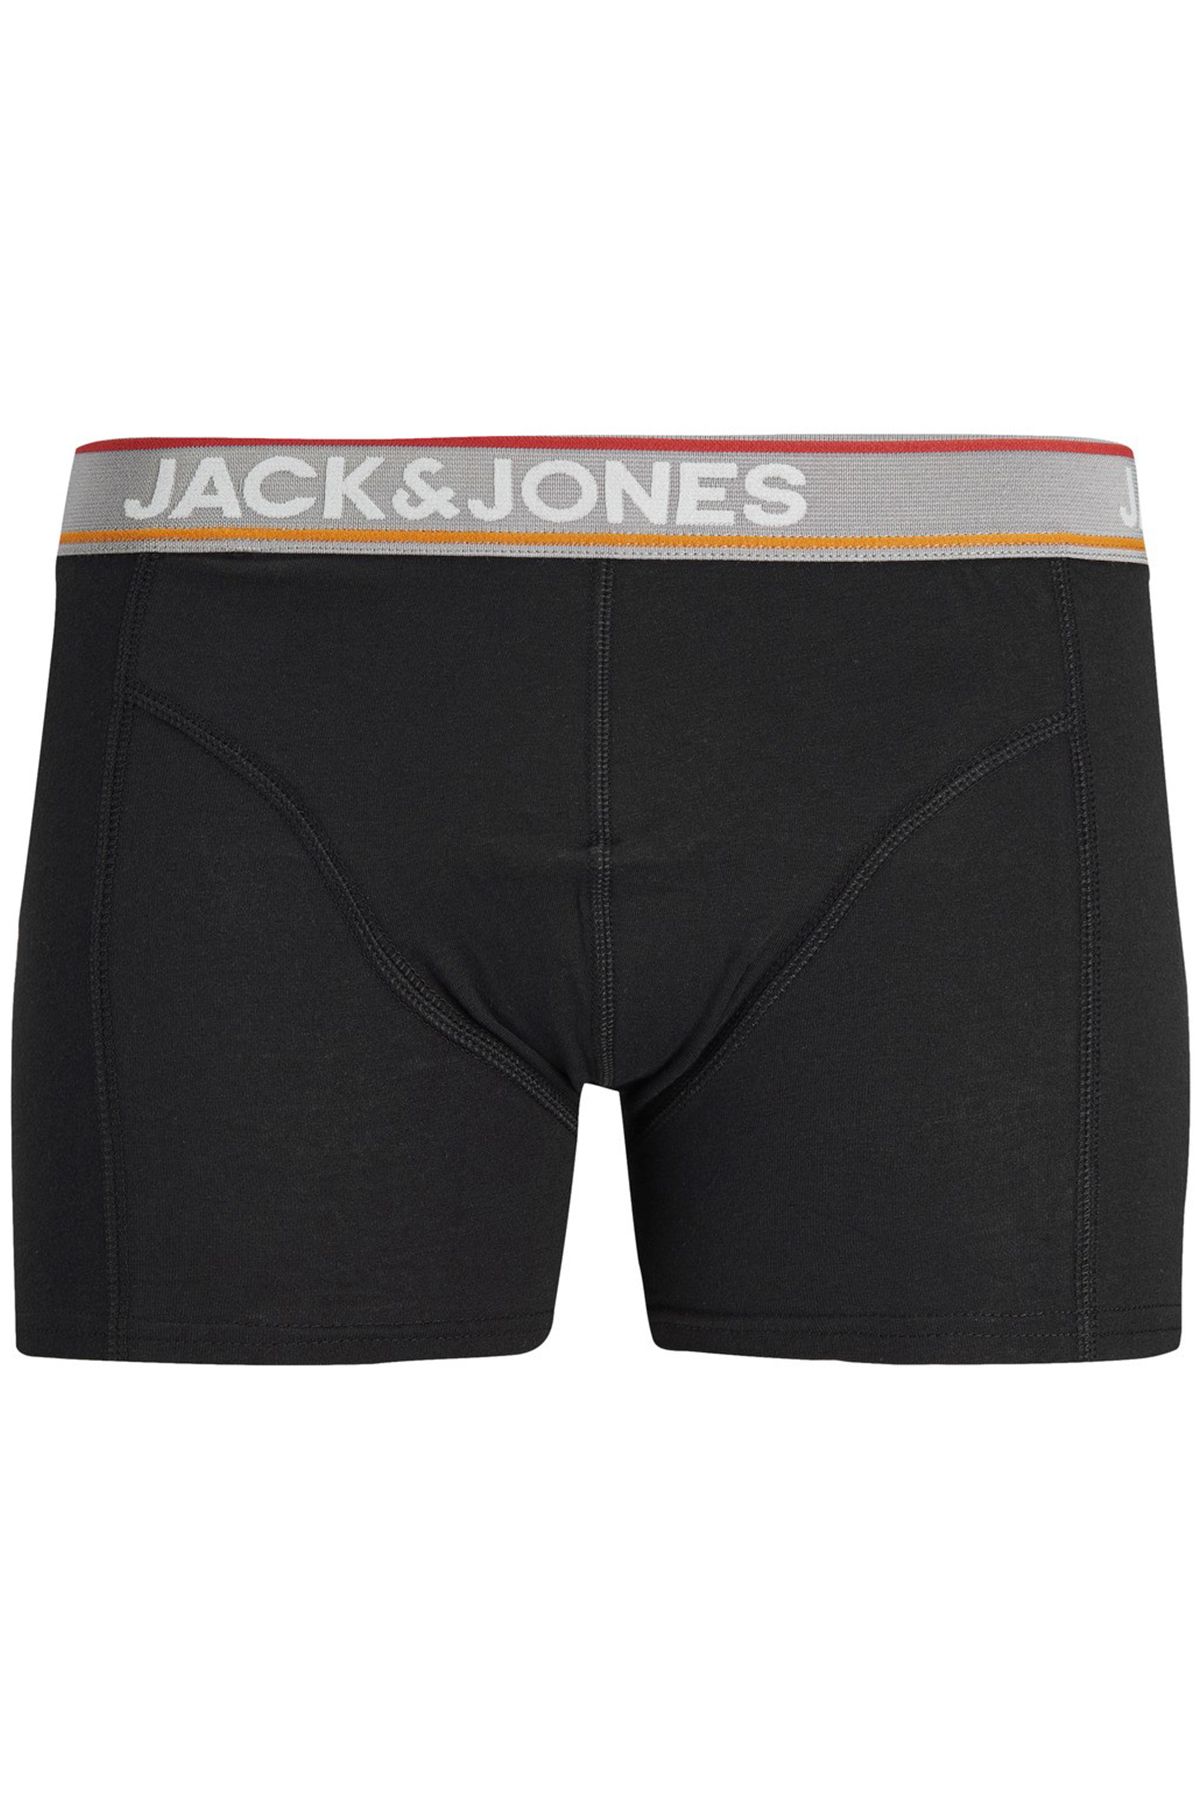 Jack & Jones Erkek Gri Boxer ( Model Kodu : 12249947 )